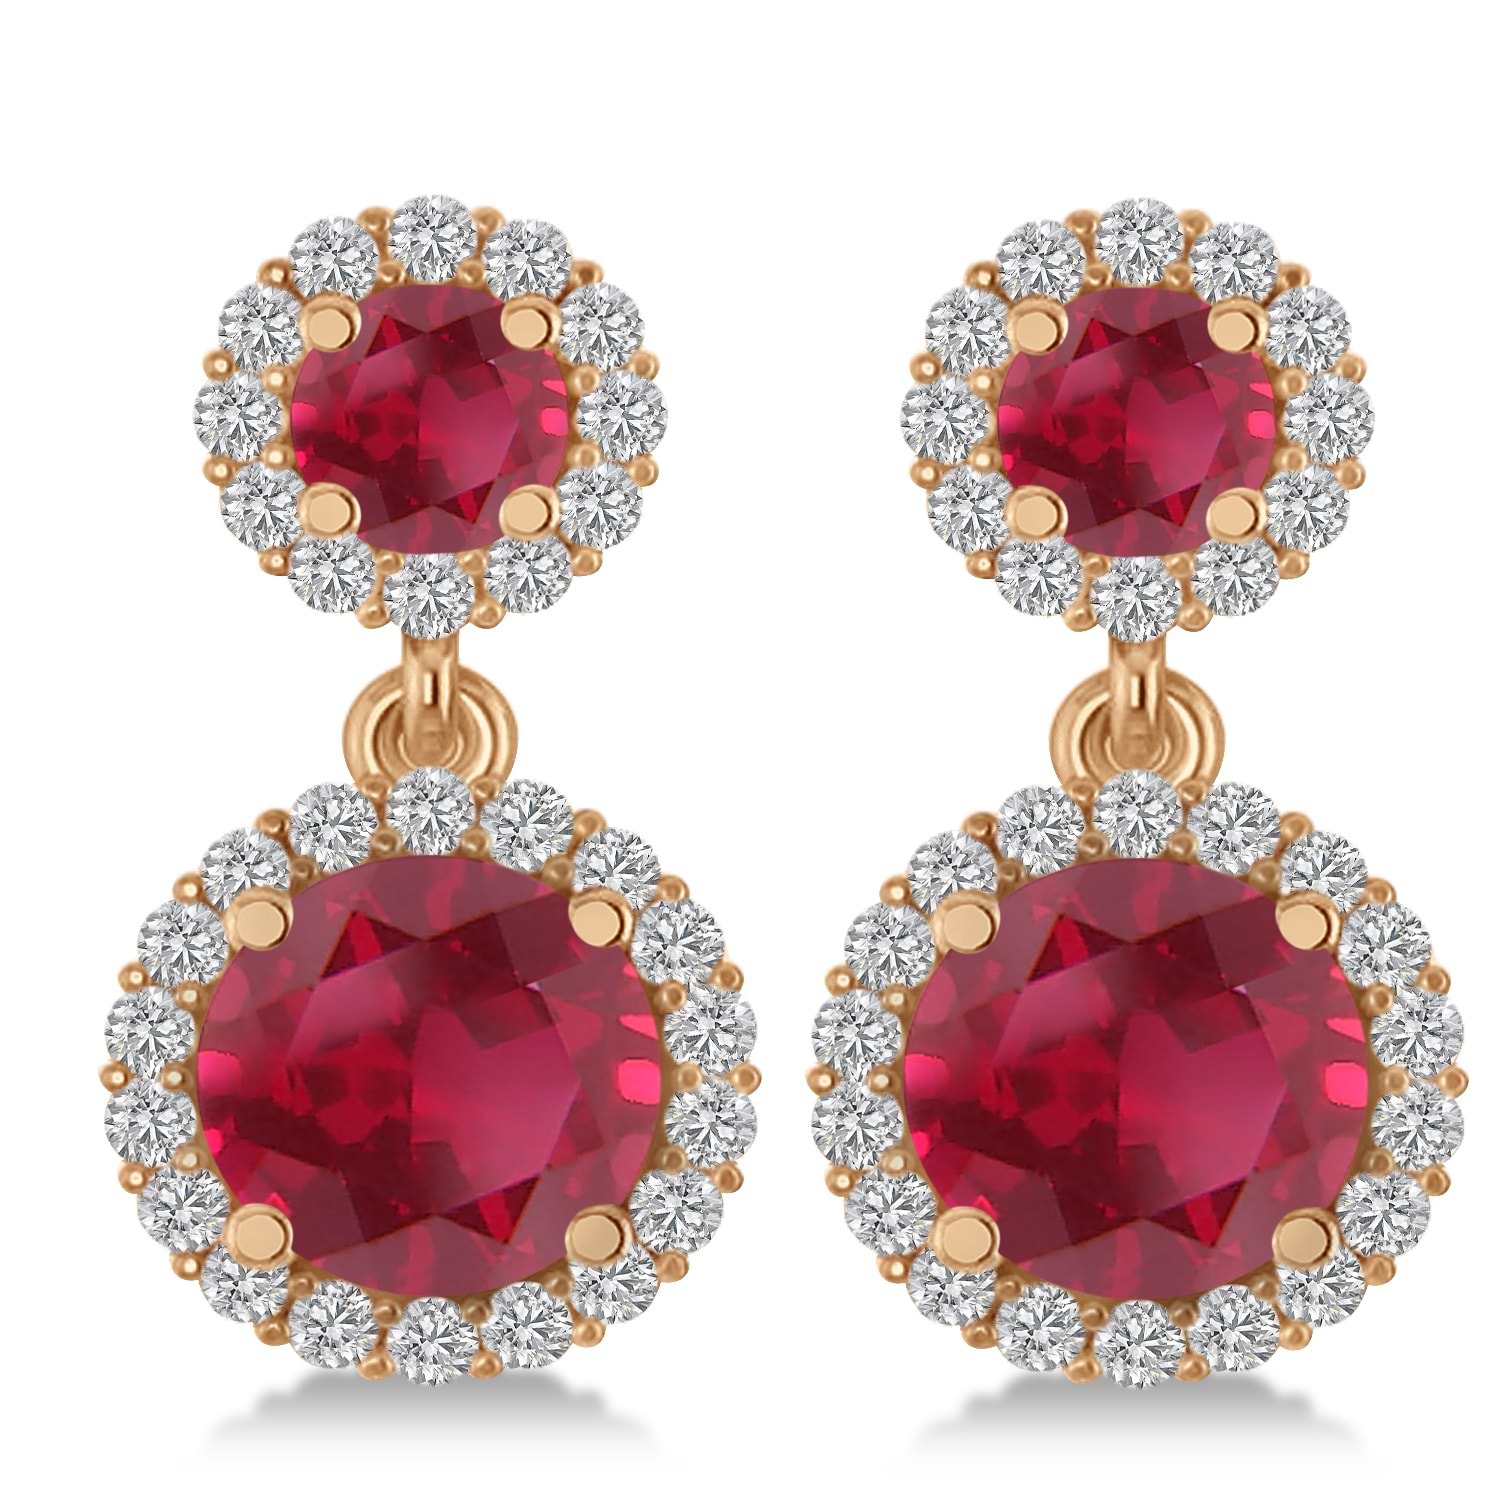 Two Stone Dangling Ruby & Diamond Earrings 14k Rose Gold (3.00ct)